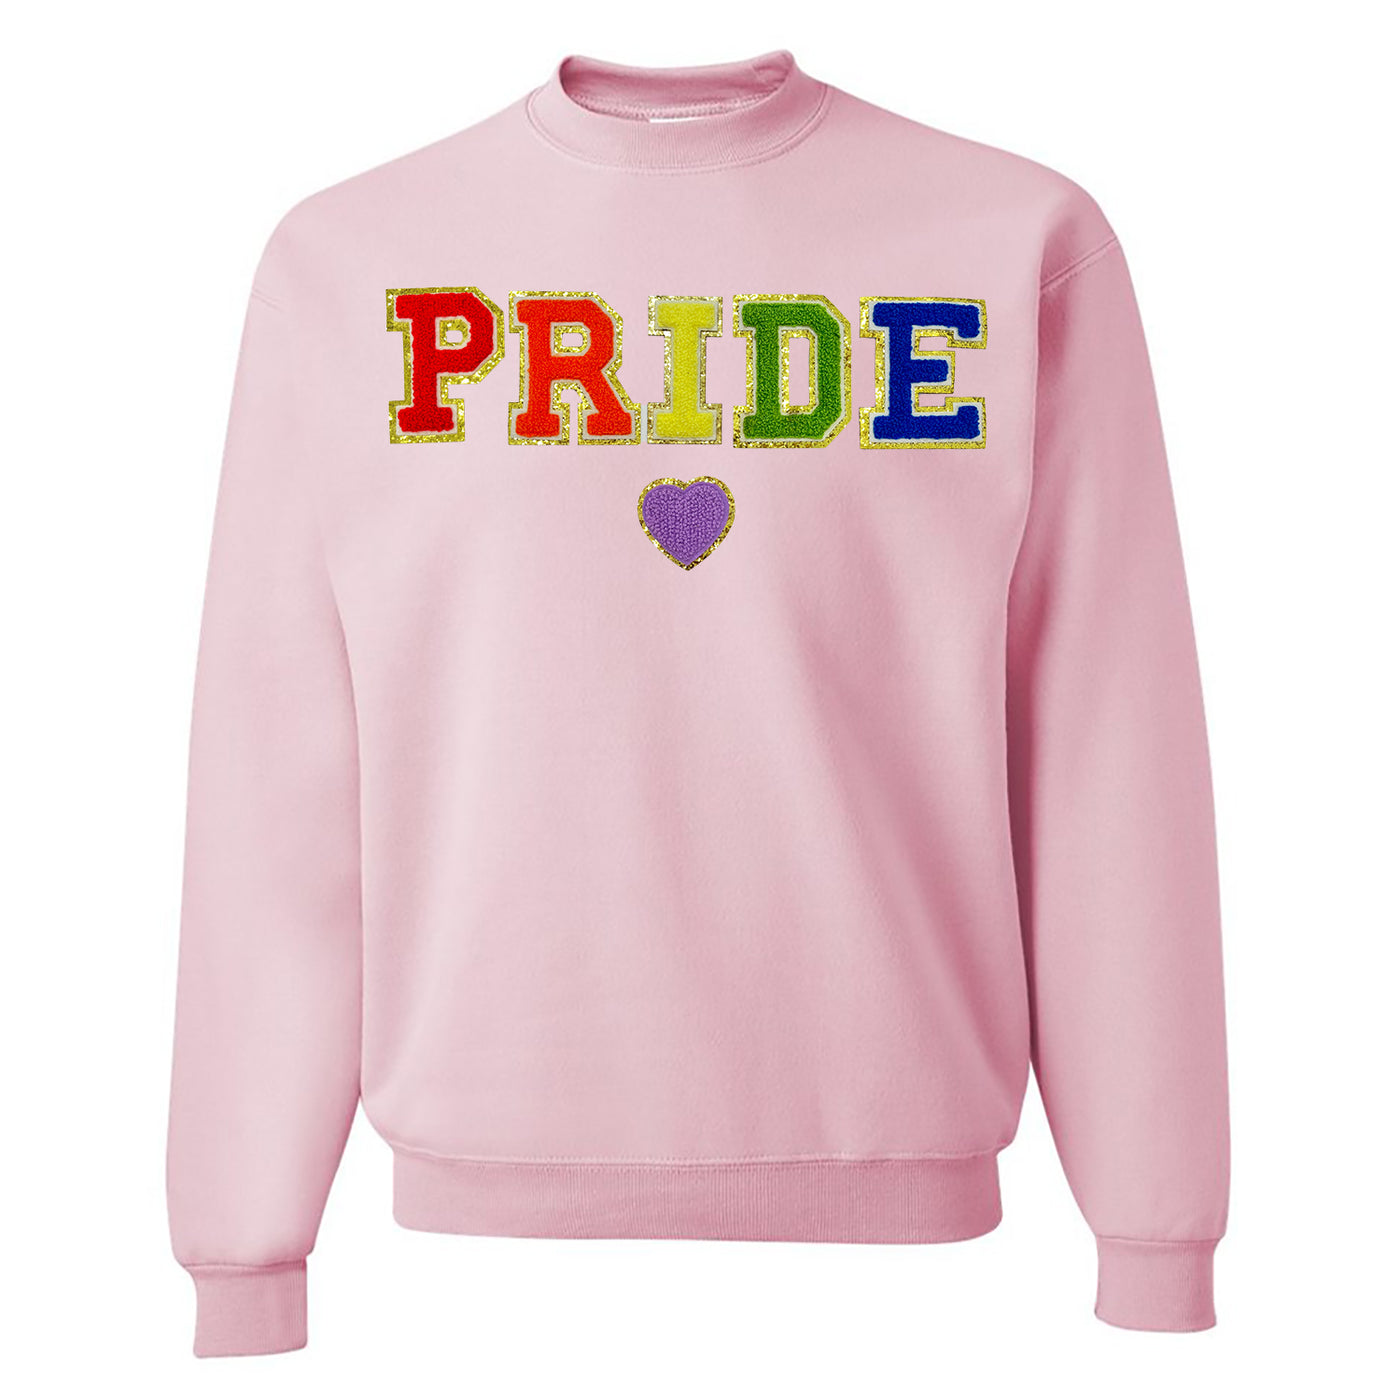 Pride Letter Patch Crewneck Sweatshirt